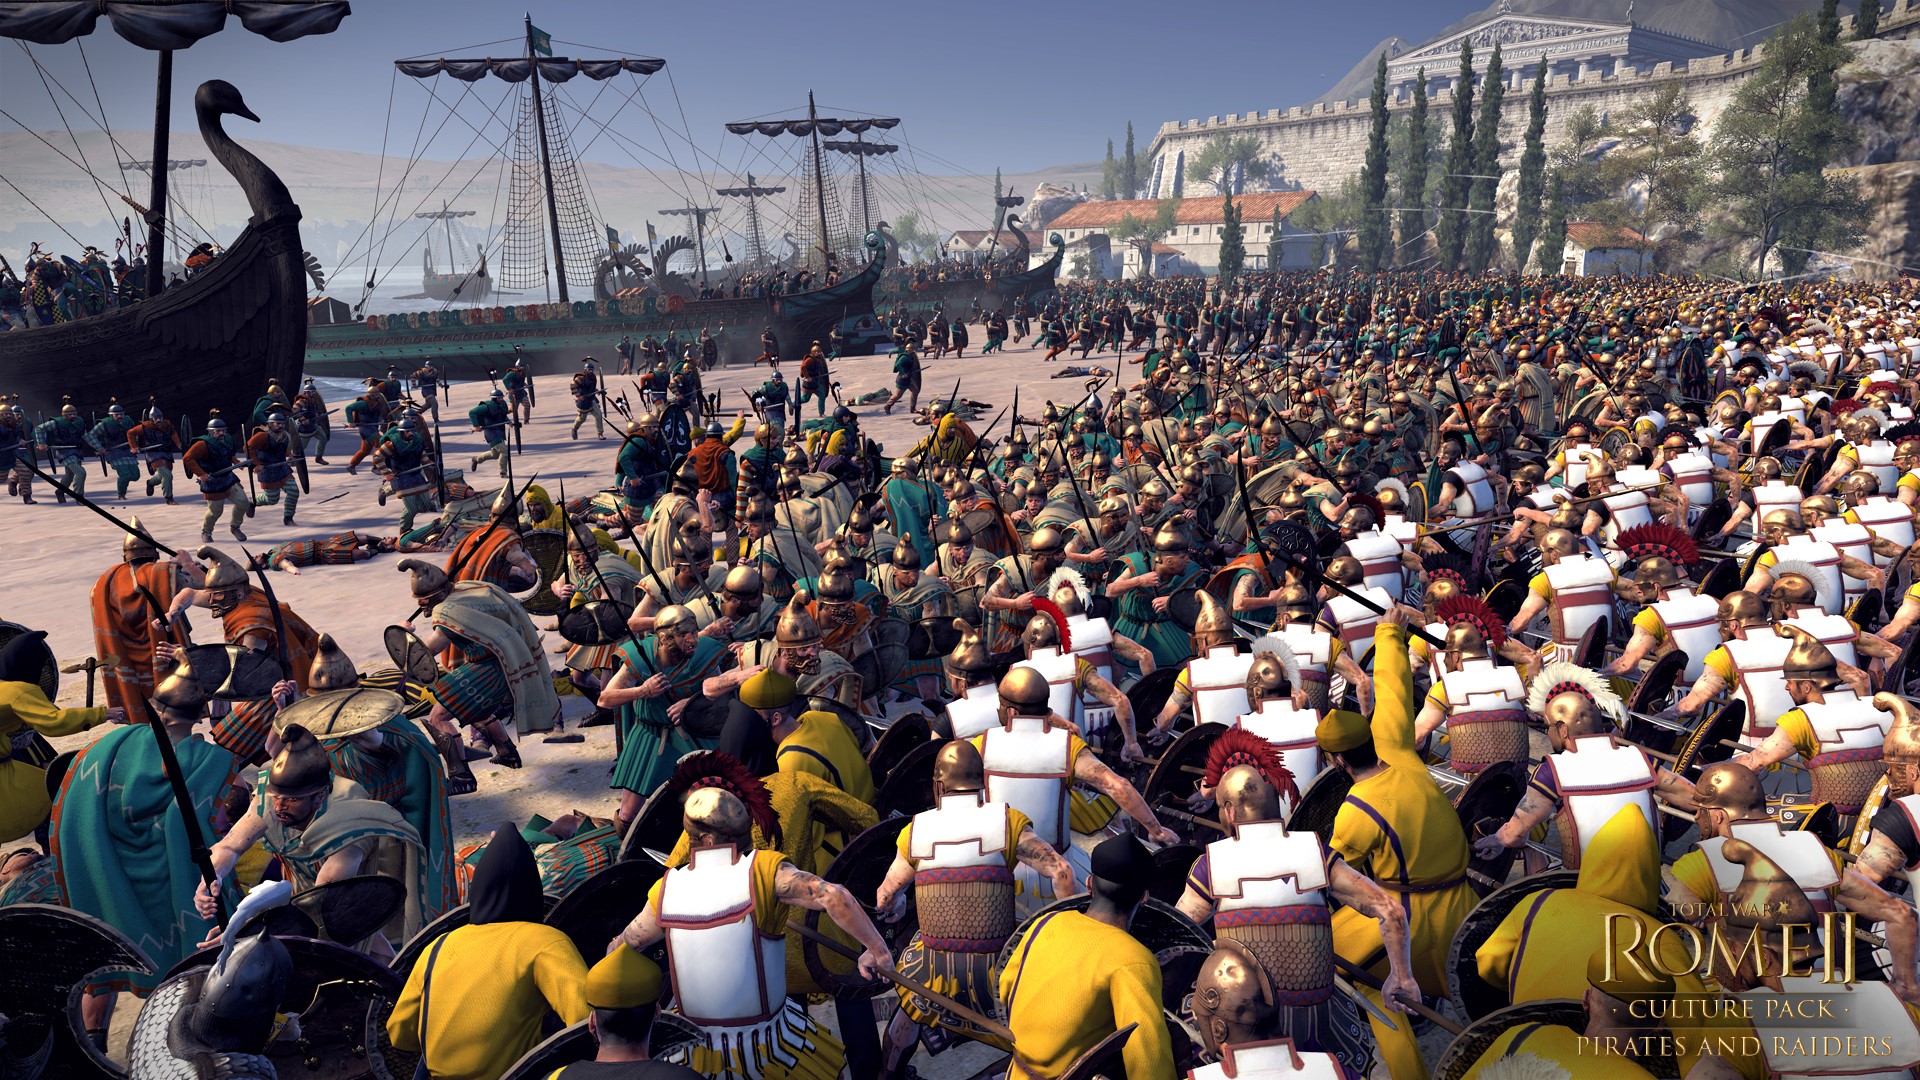 Total War Rome II Pirates  Raiders DLC (steam) -- RU